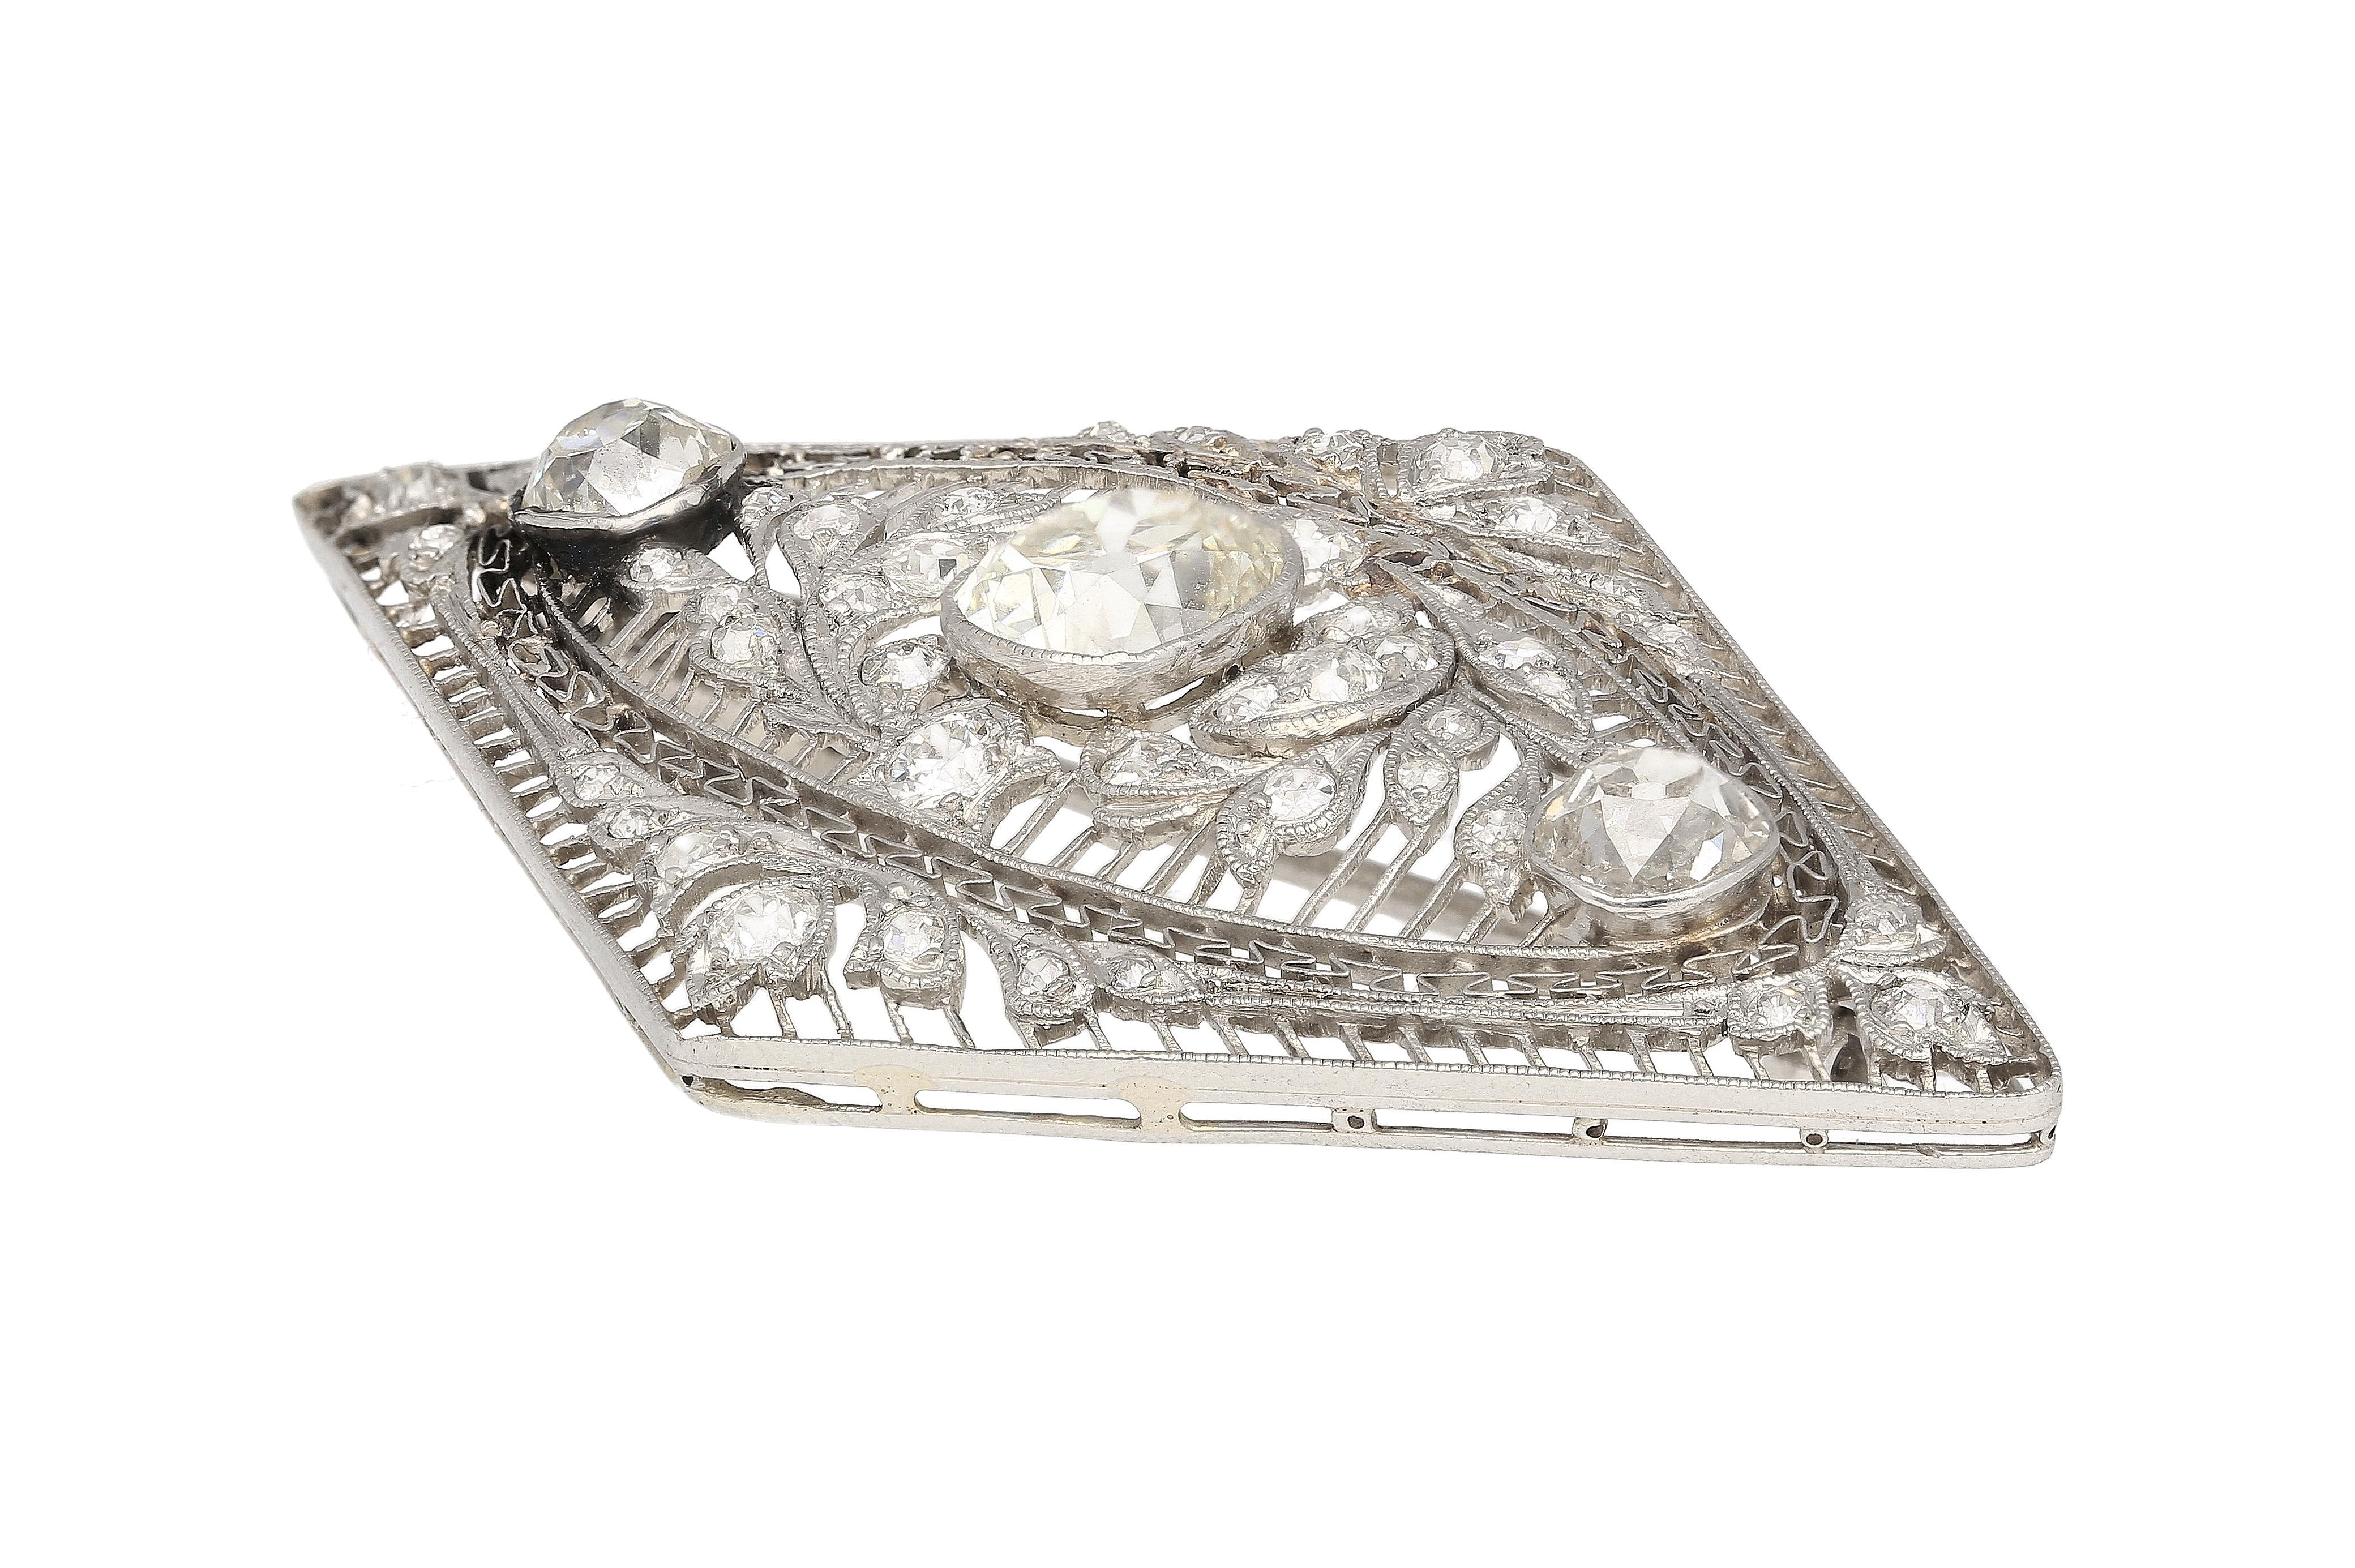 Cushion Cut 3.5 Carat Old European Cut Art Deco Diamond Brooch in Textured Filigree Platinum For Sale